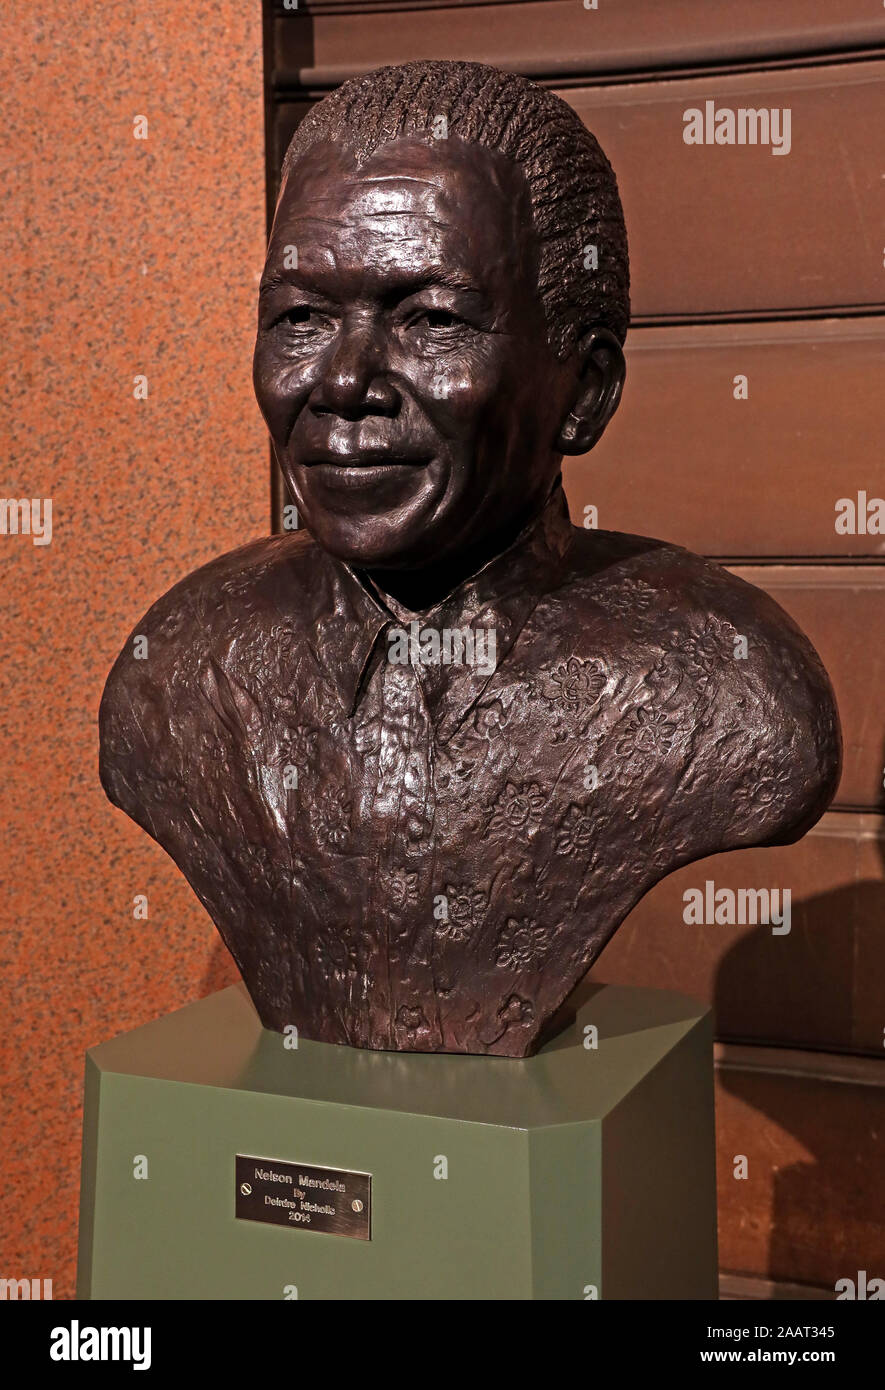 Nelson Mandela statue, Glasgow City Chambers entrance, by Deirdre Nicholls,2014 Stock Photo